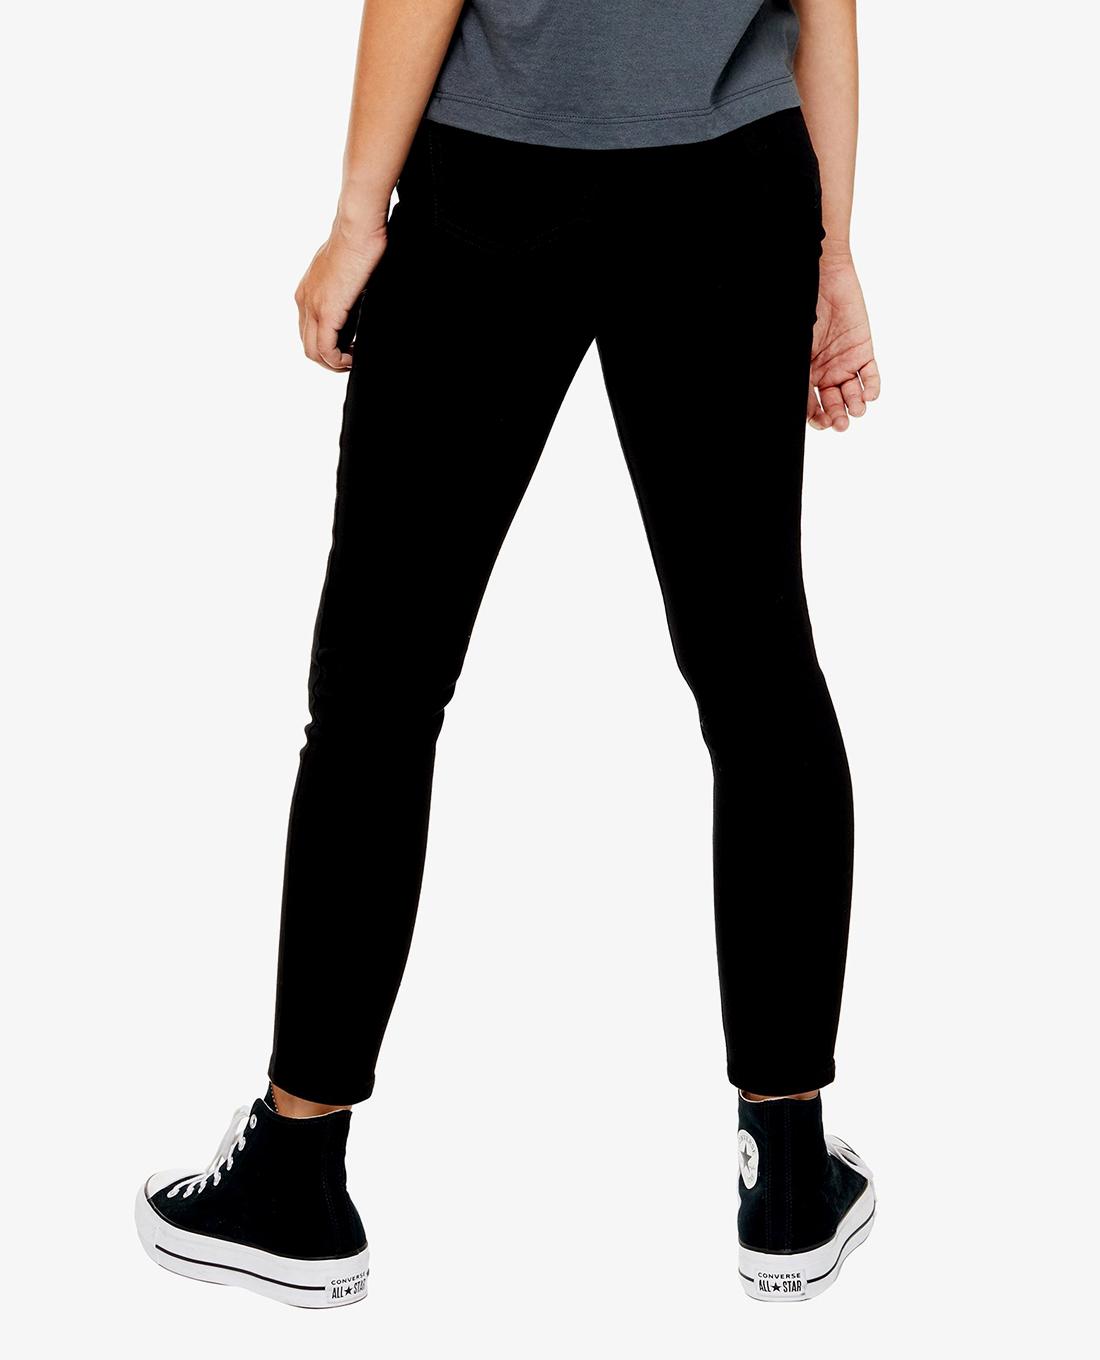 TOPSHOP - Quần jeans nữ skinny Petite Black Jamie 26A65QBLK